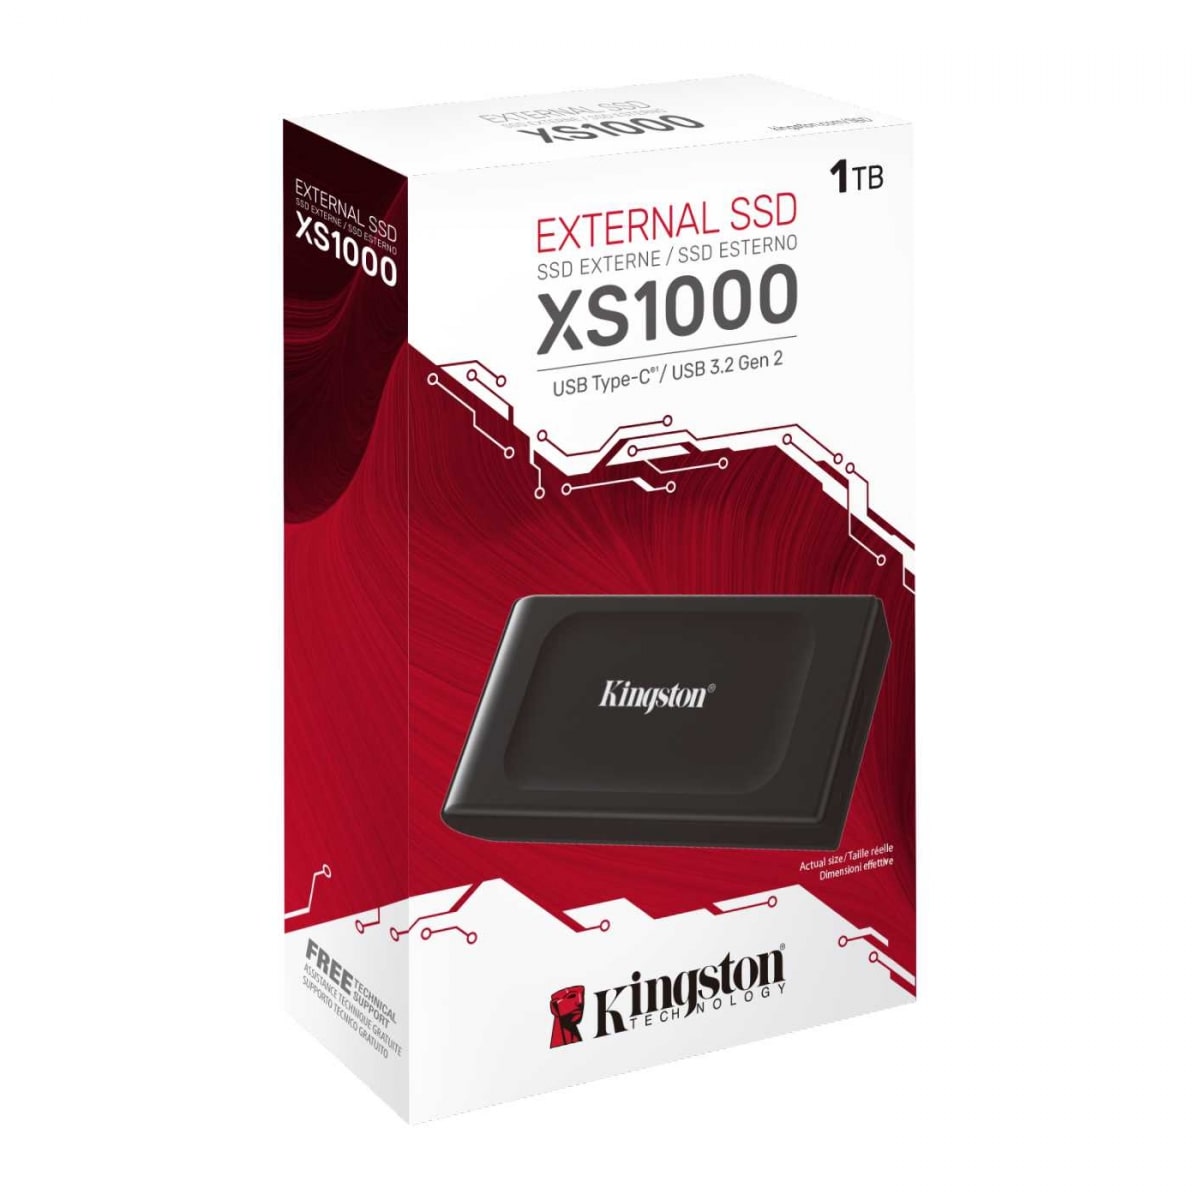 XS1000 外接式固態硬碟 SSD (SXS1000)